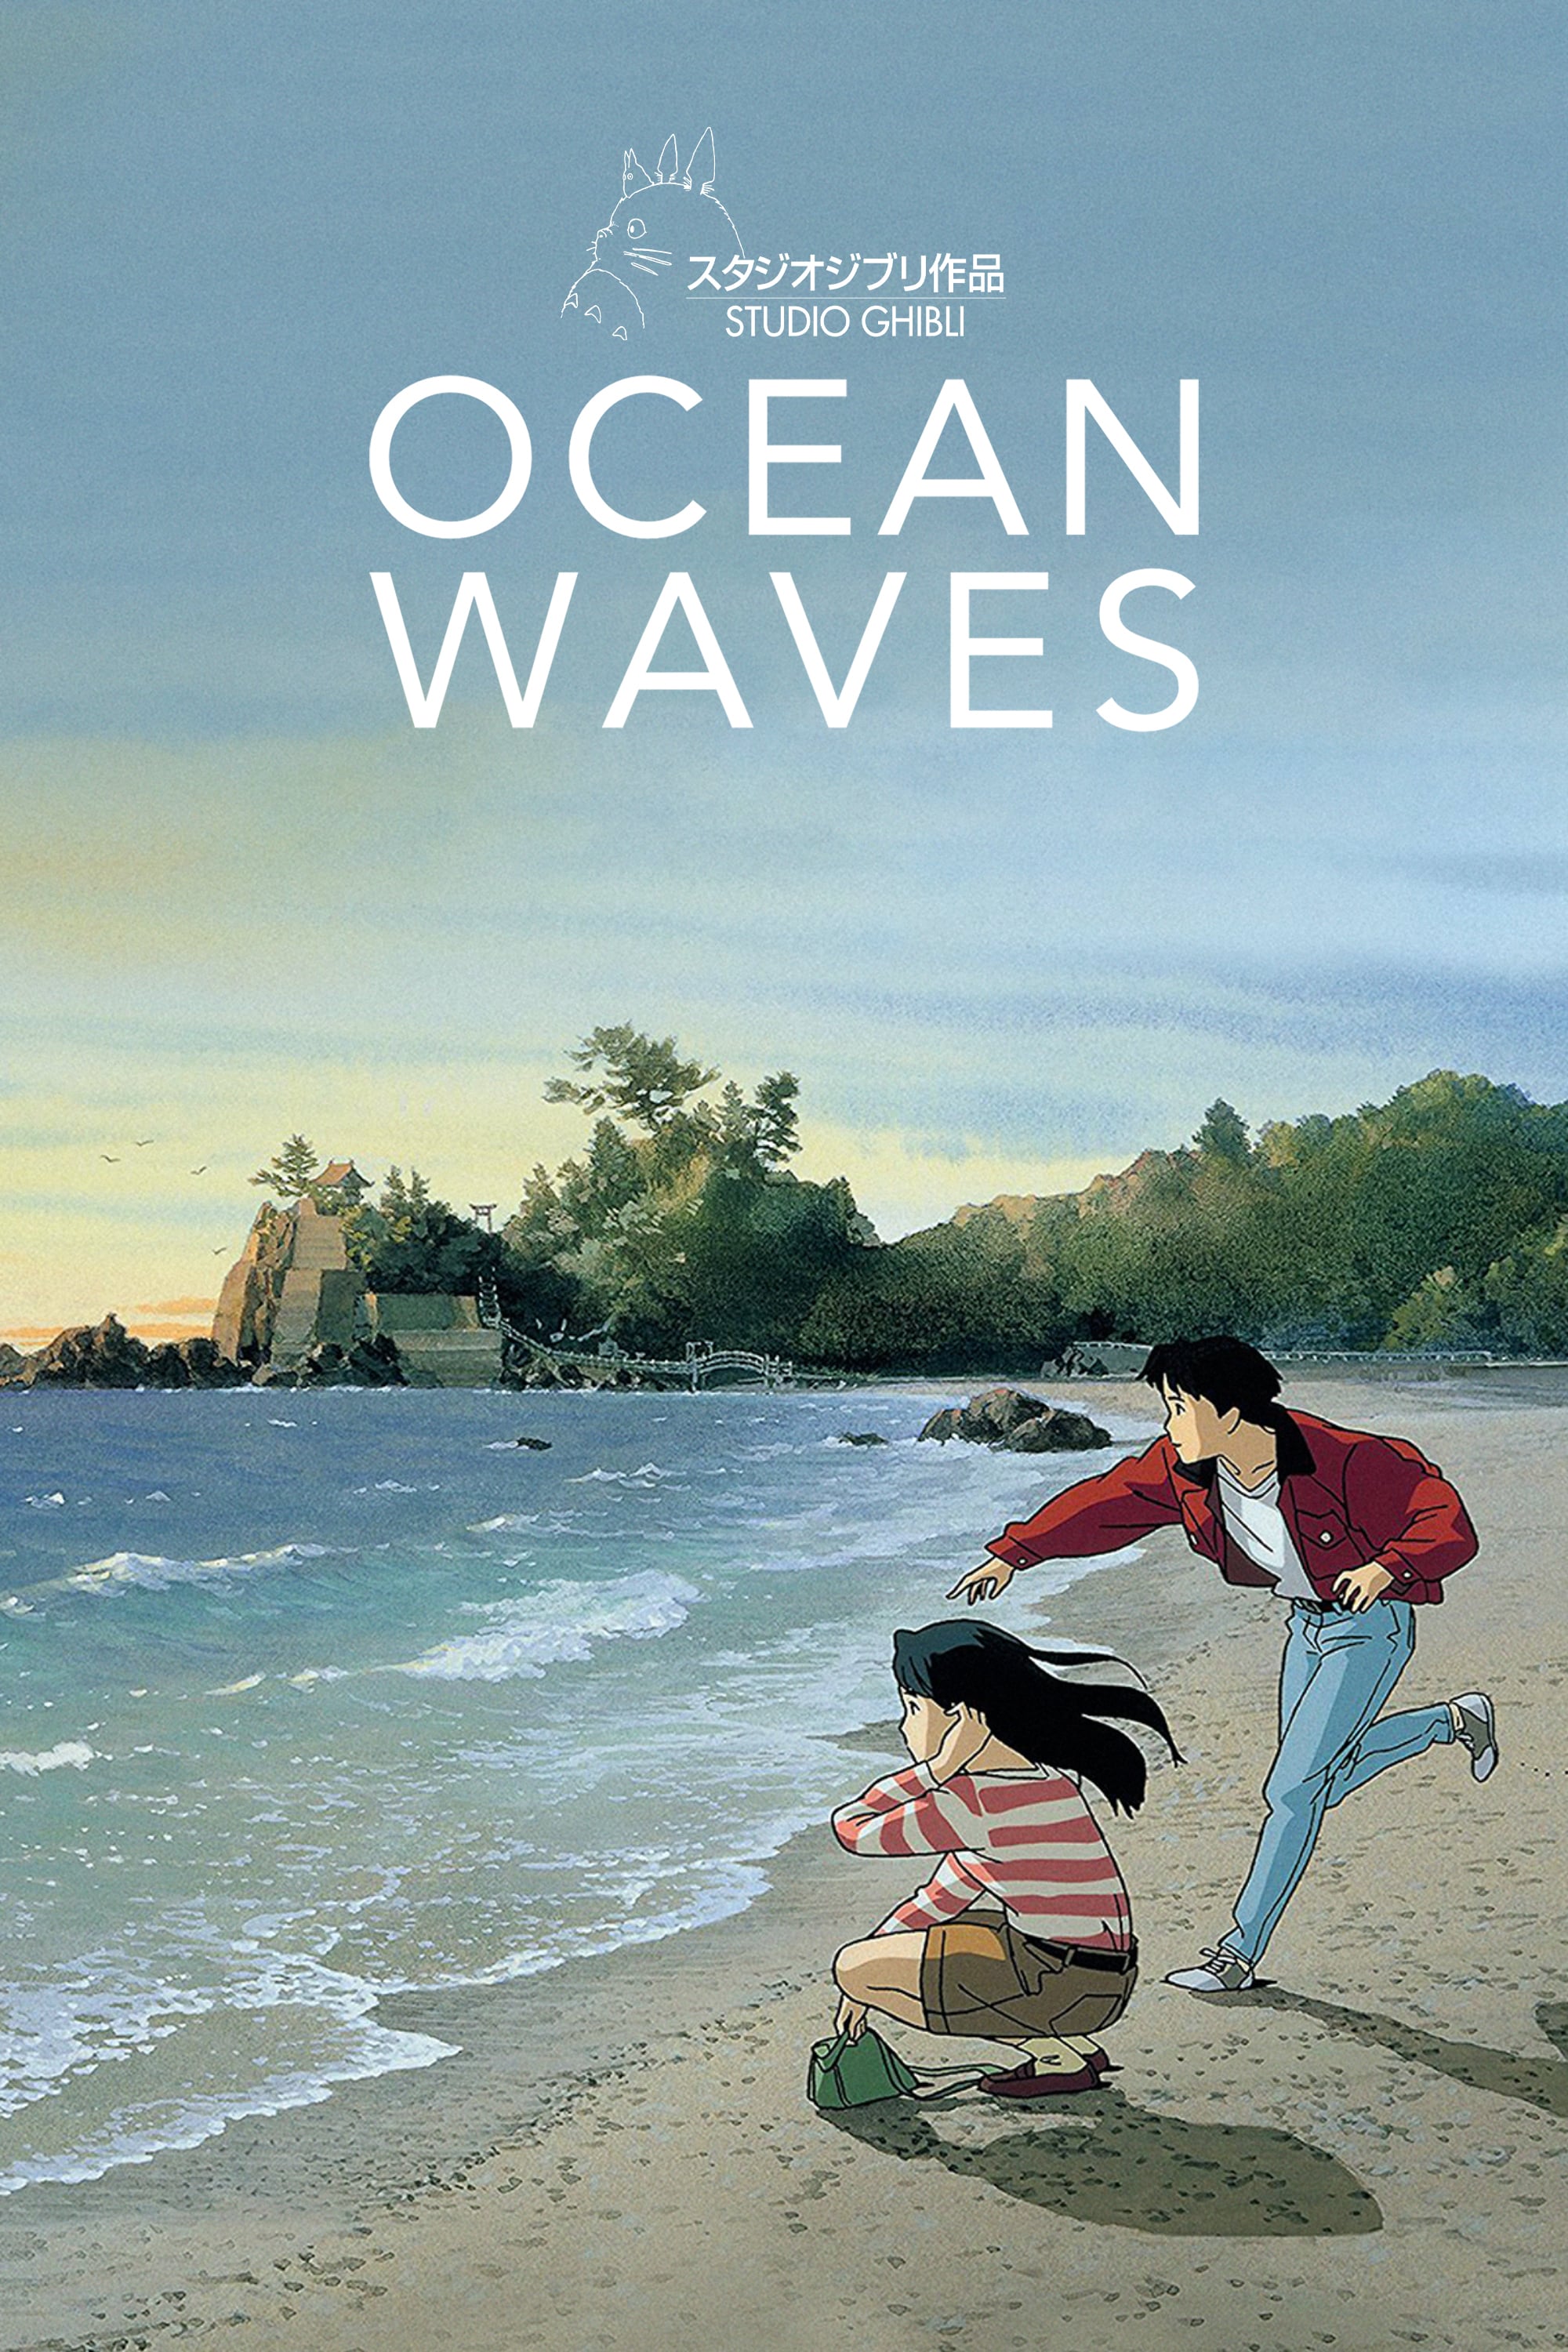 ocean waves full movie english dub